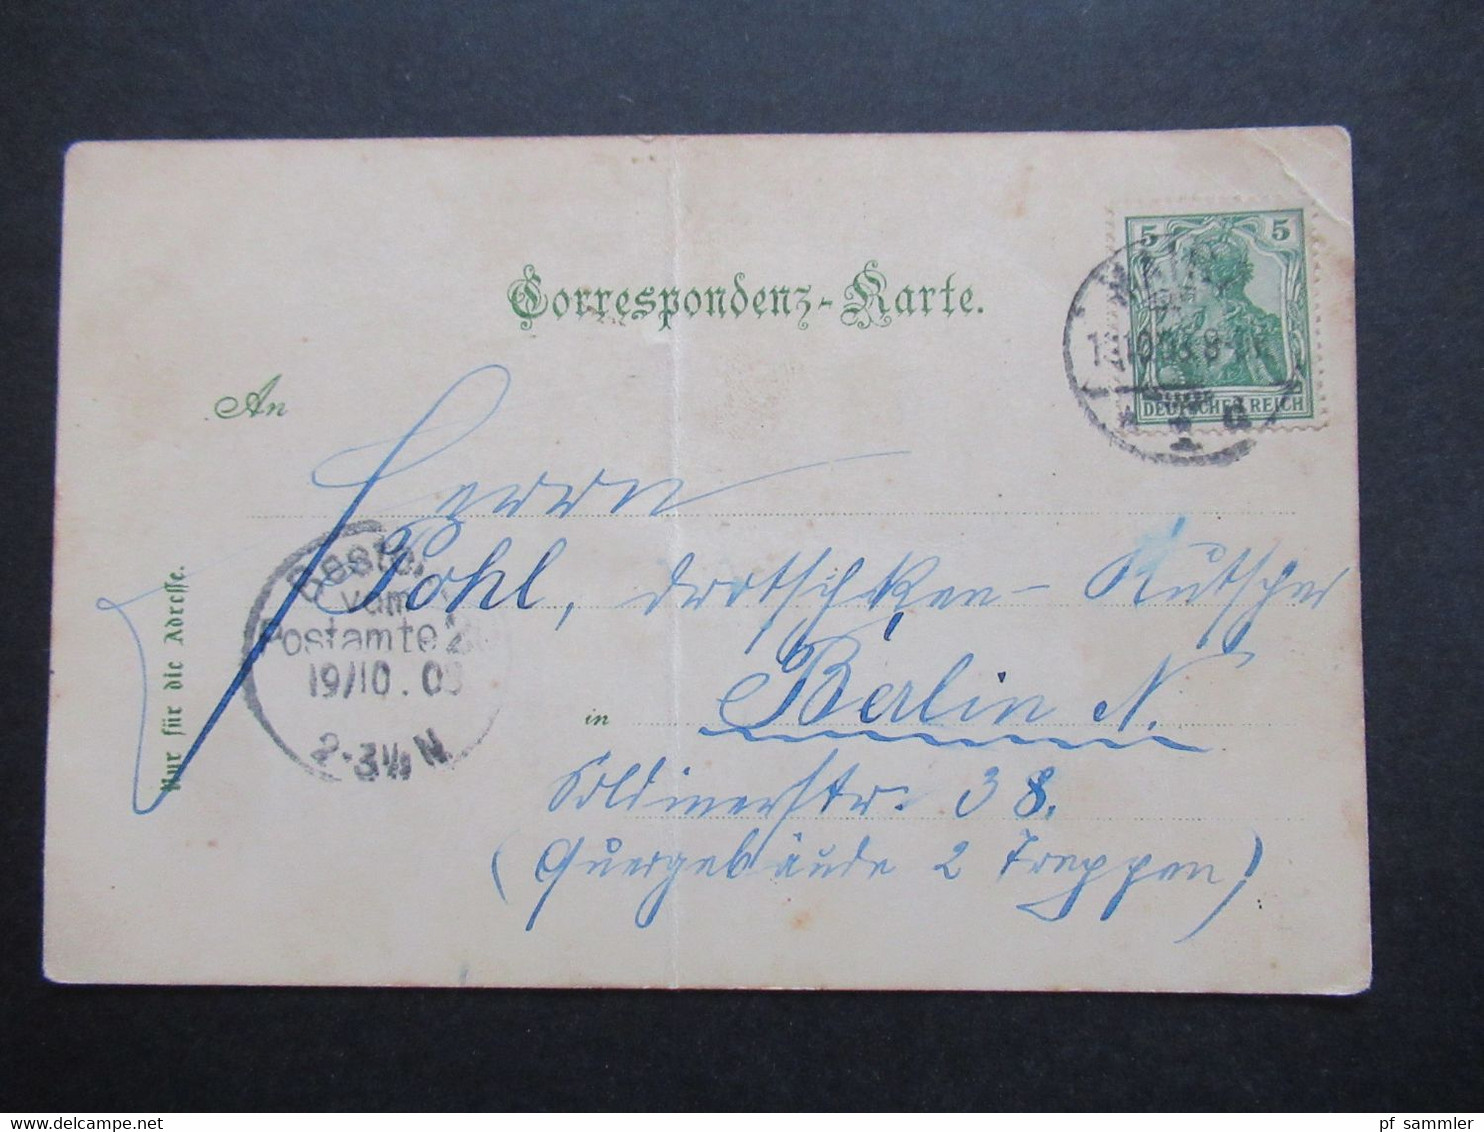 Österreich / DR 1903 Litho Gruss Aus Zwentendorf Mehrbildkarte Kirche Handlung Karl Zellhofer. Verlag Edgar Schmidt Dres - Greetings From...